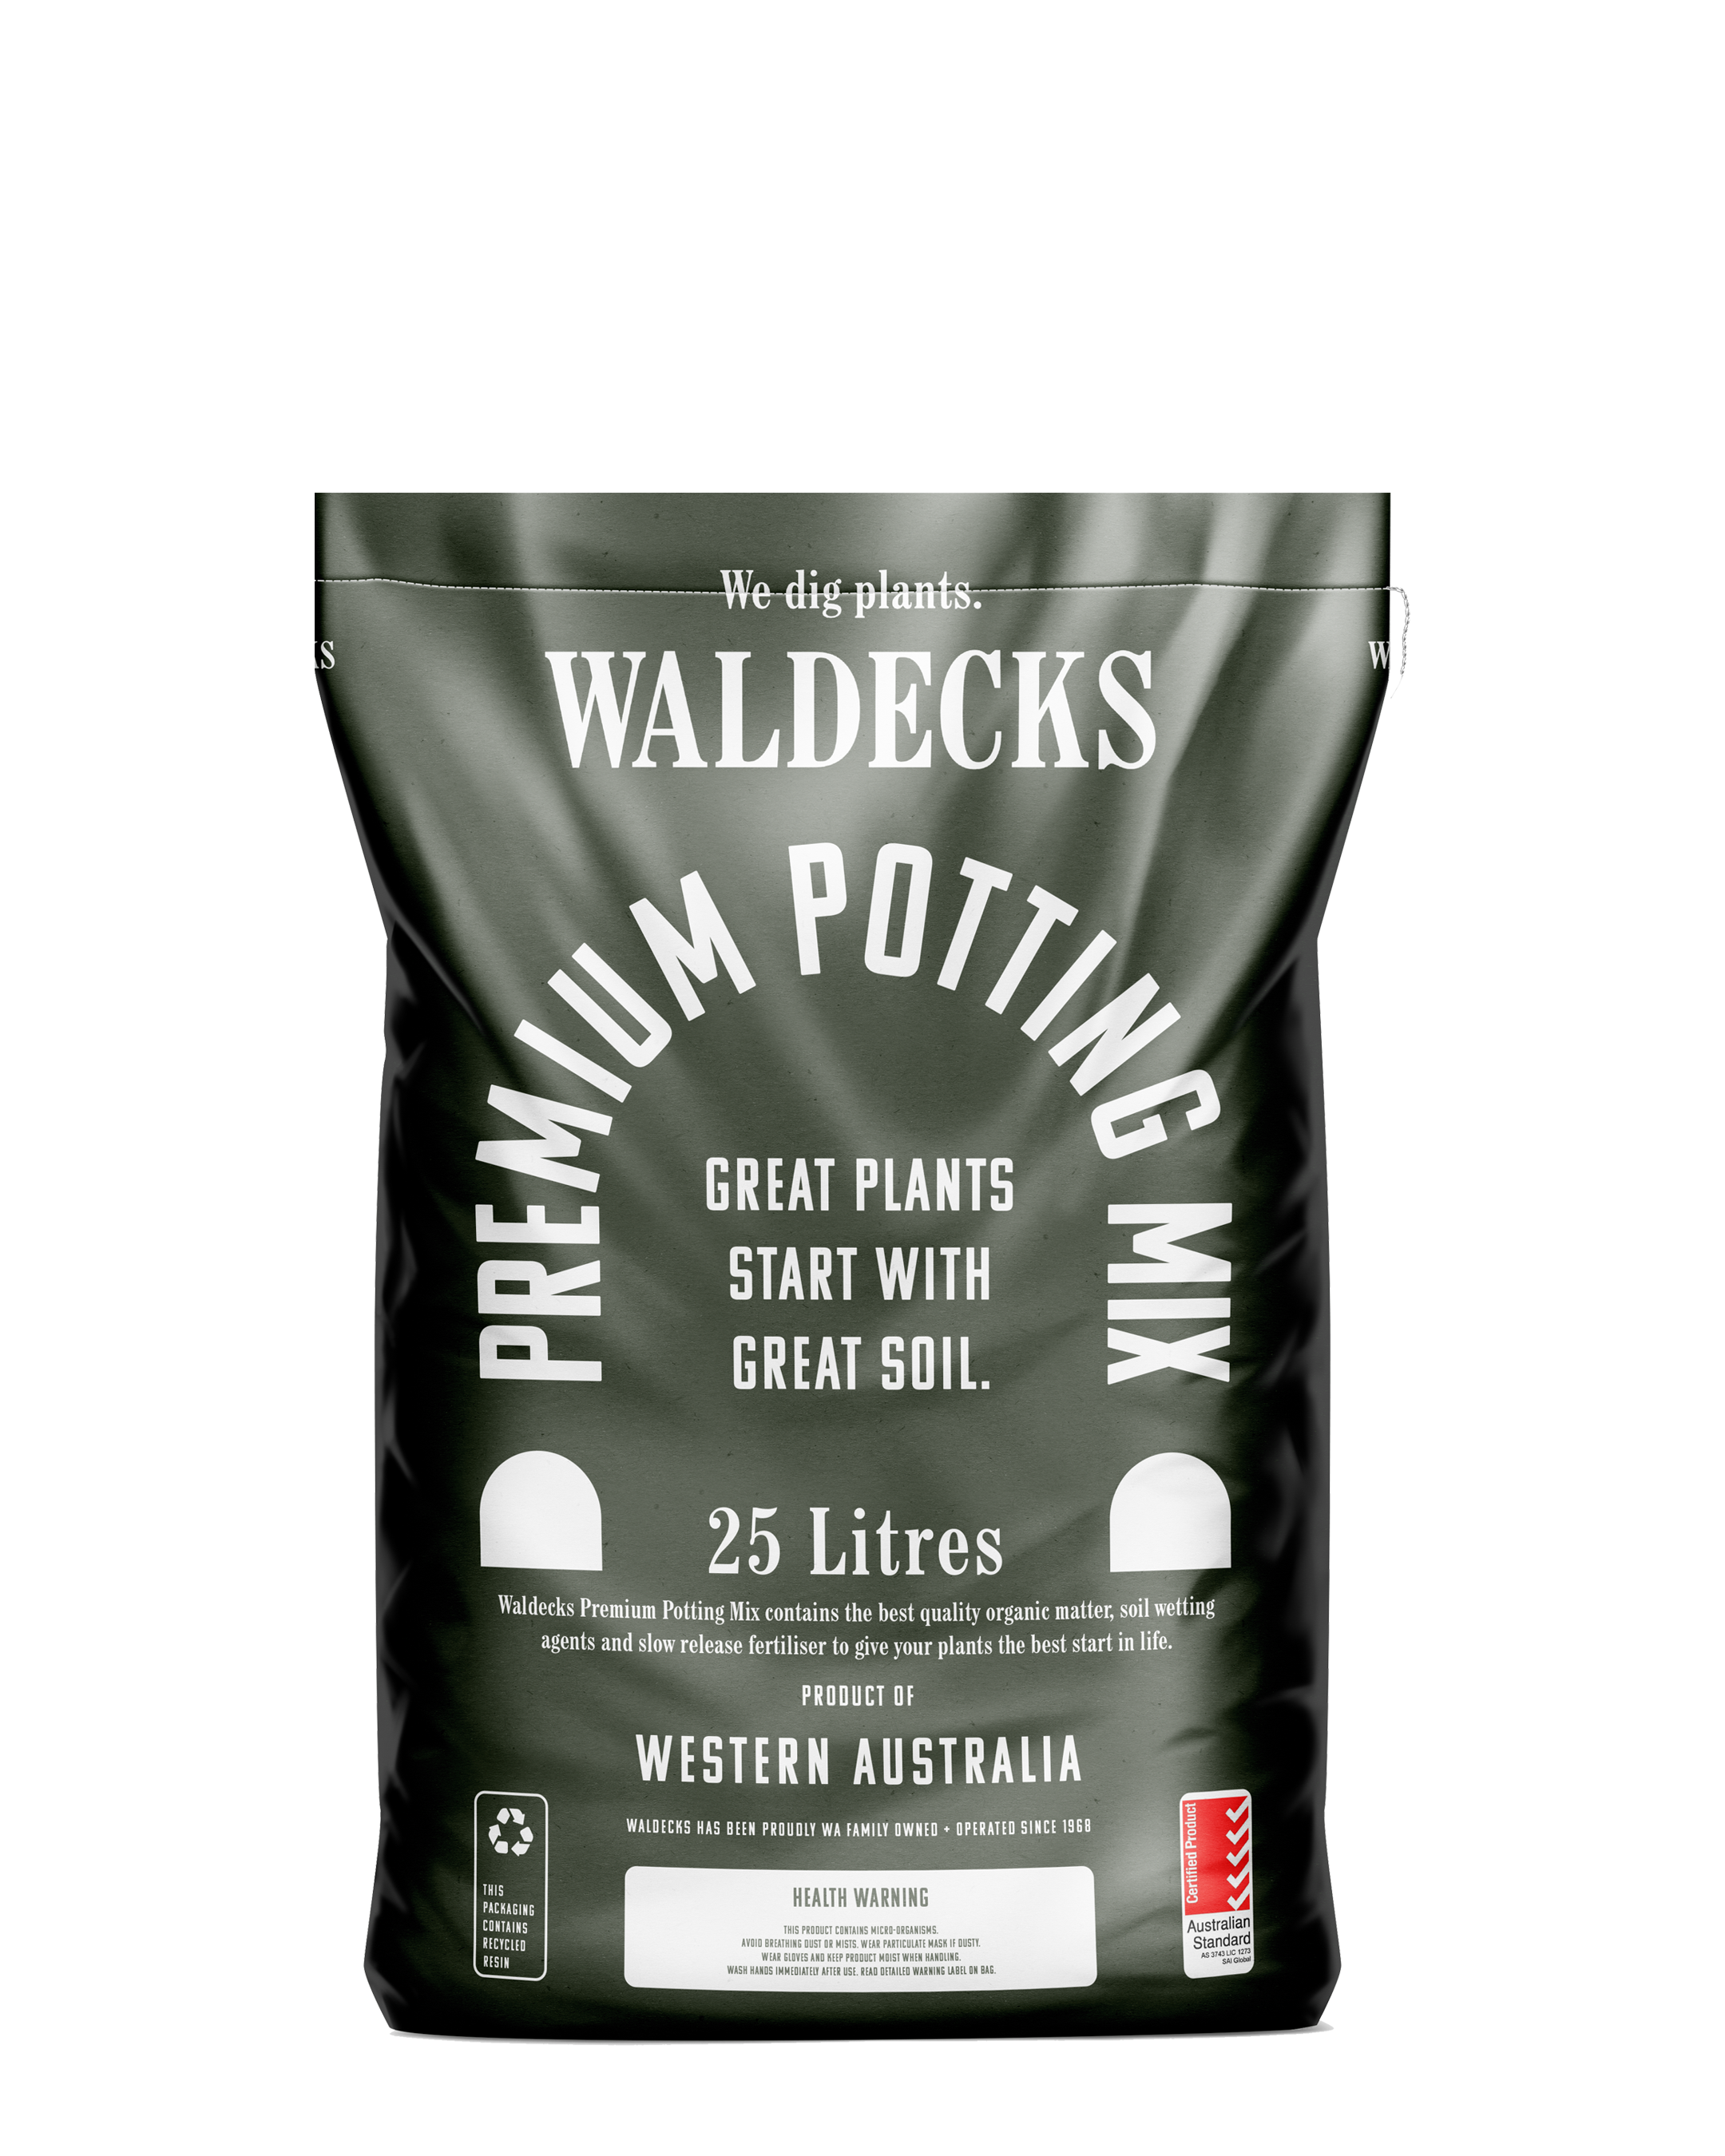 Waldecks Premium Potting Mix